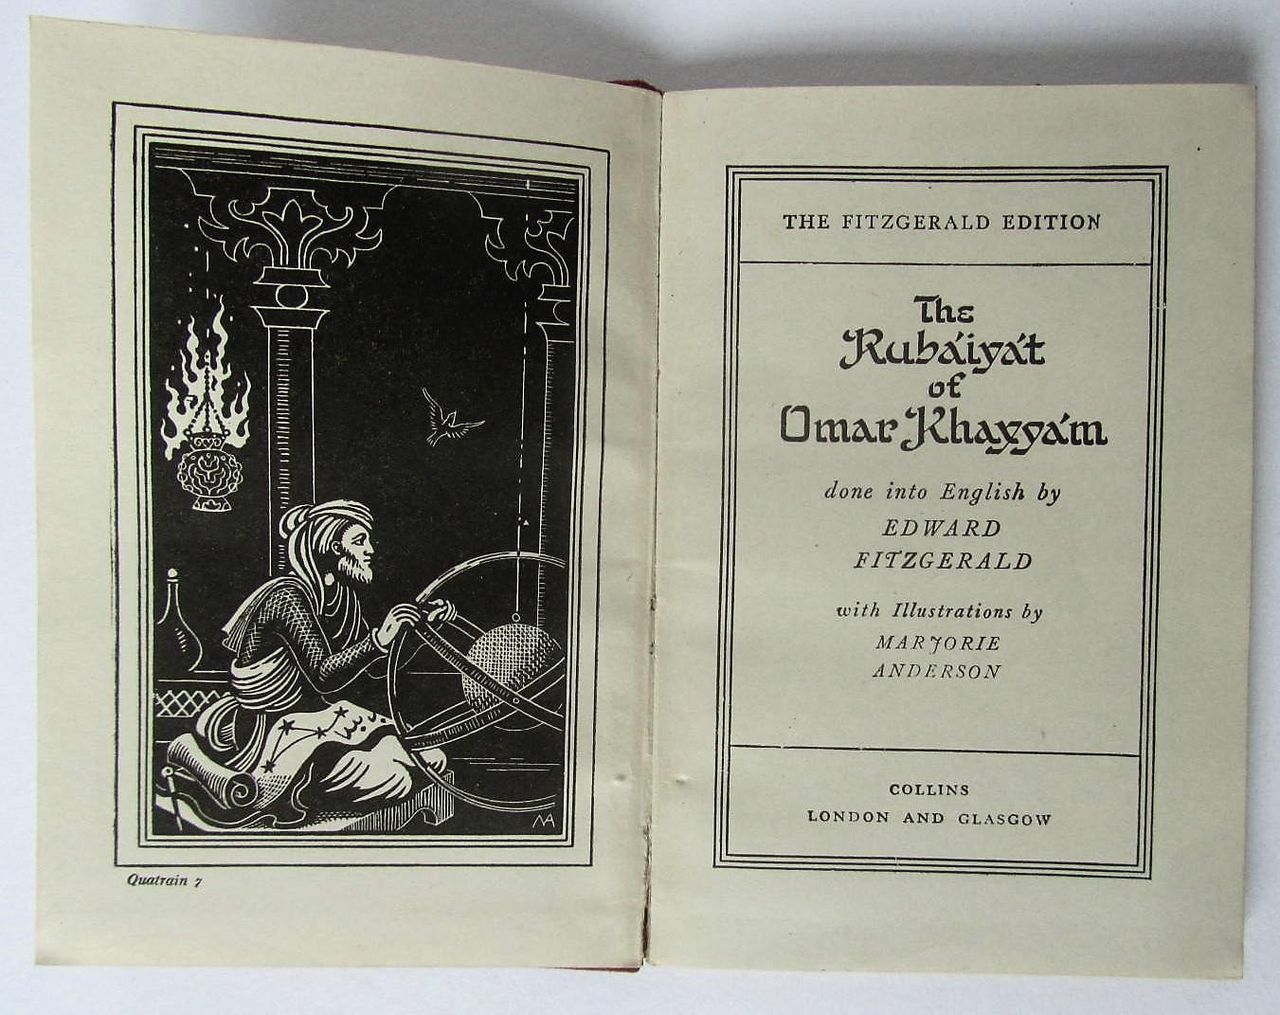 The Rubaiyat of Omar Khayyam, книга издательства Collins London & Glasgow